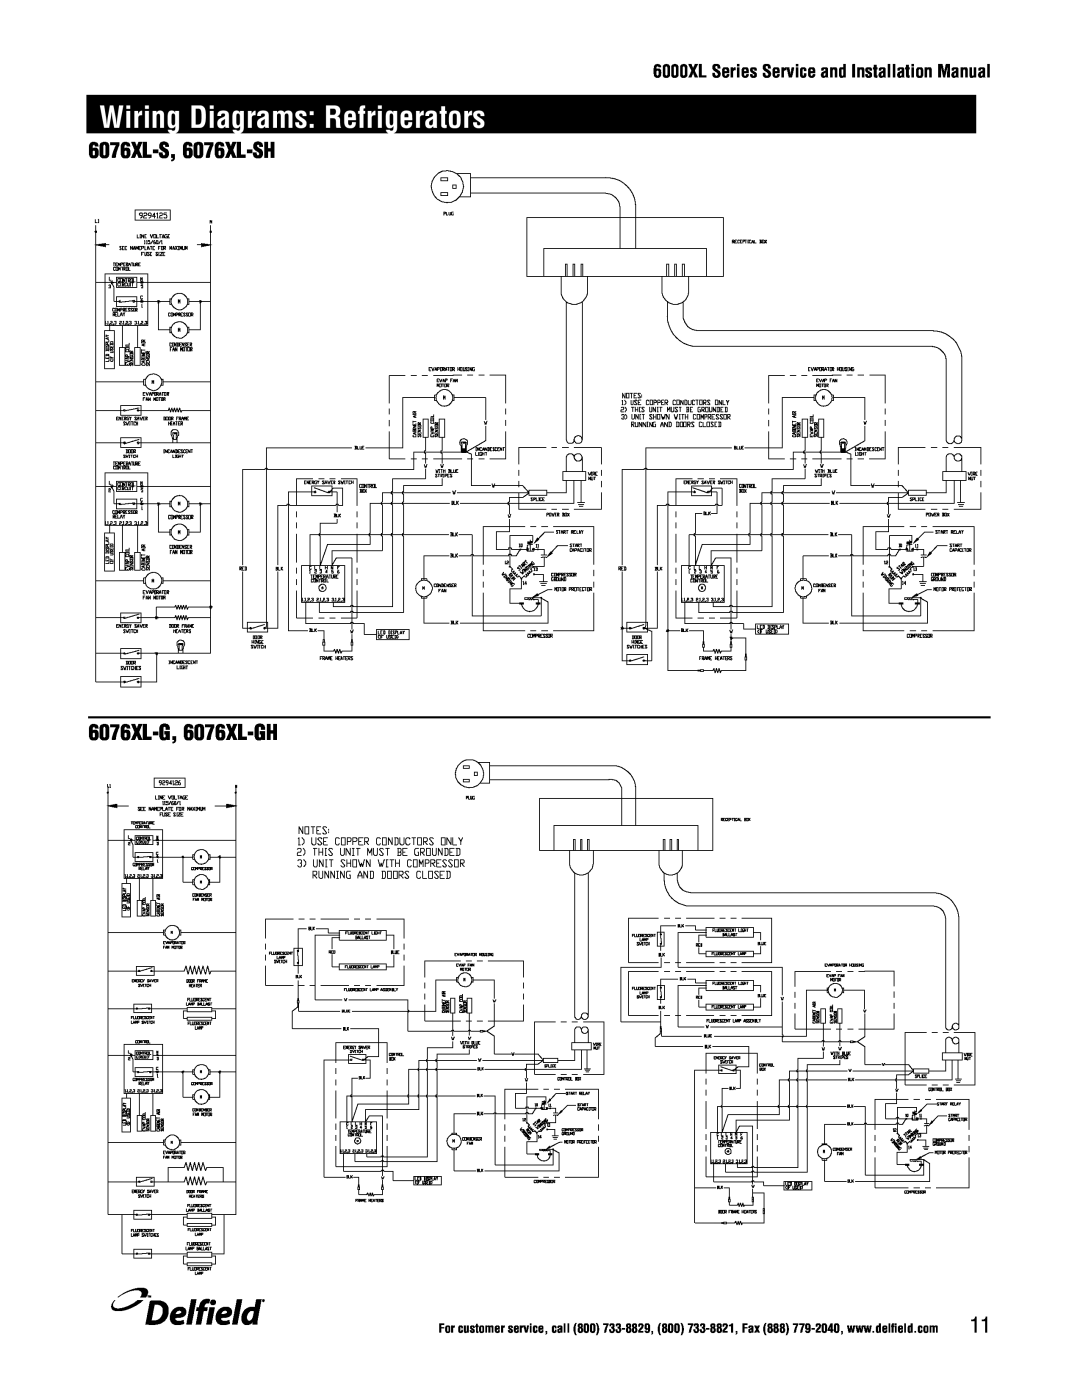 Delfield 6100XL manual 6076XL-S, 6076XL-SH, 6076XL-G, 6076XL-GH, Delfield, Wiring Diagrams: Refrigerators 